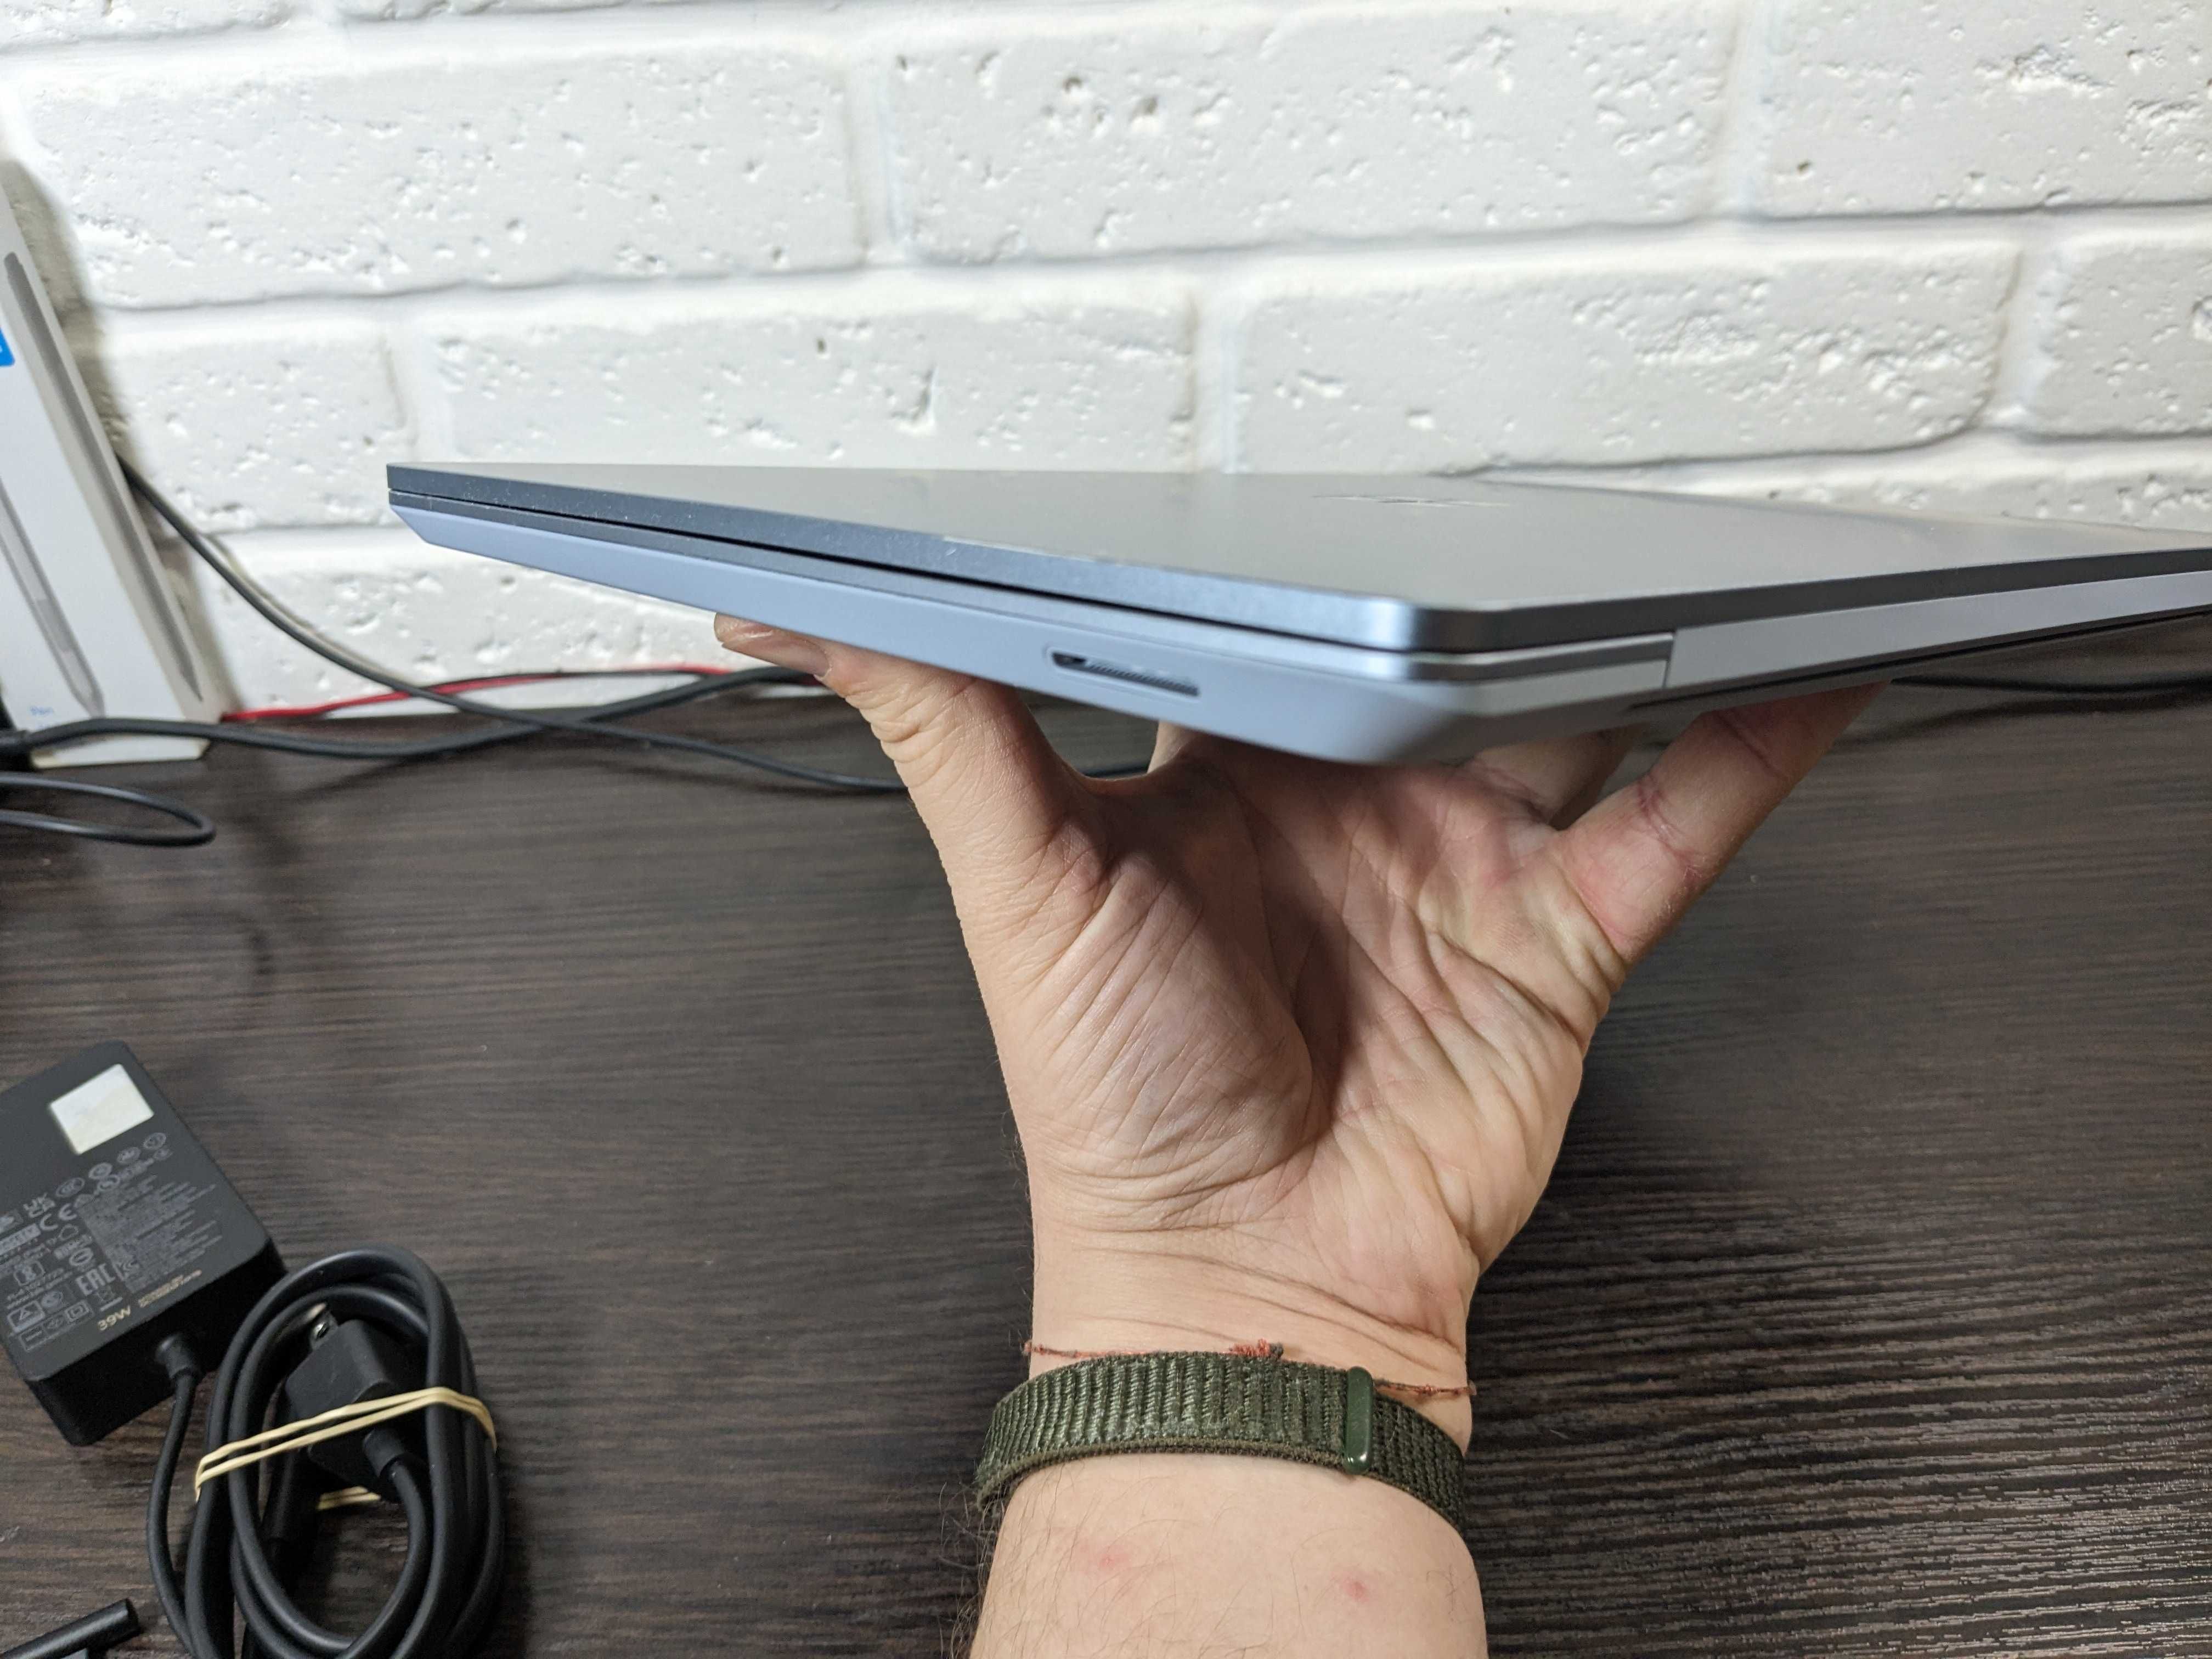 Microsoft Surface Laptop Go - 12.4" - Core i5-1035G7/8gb/256gb